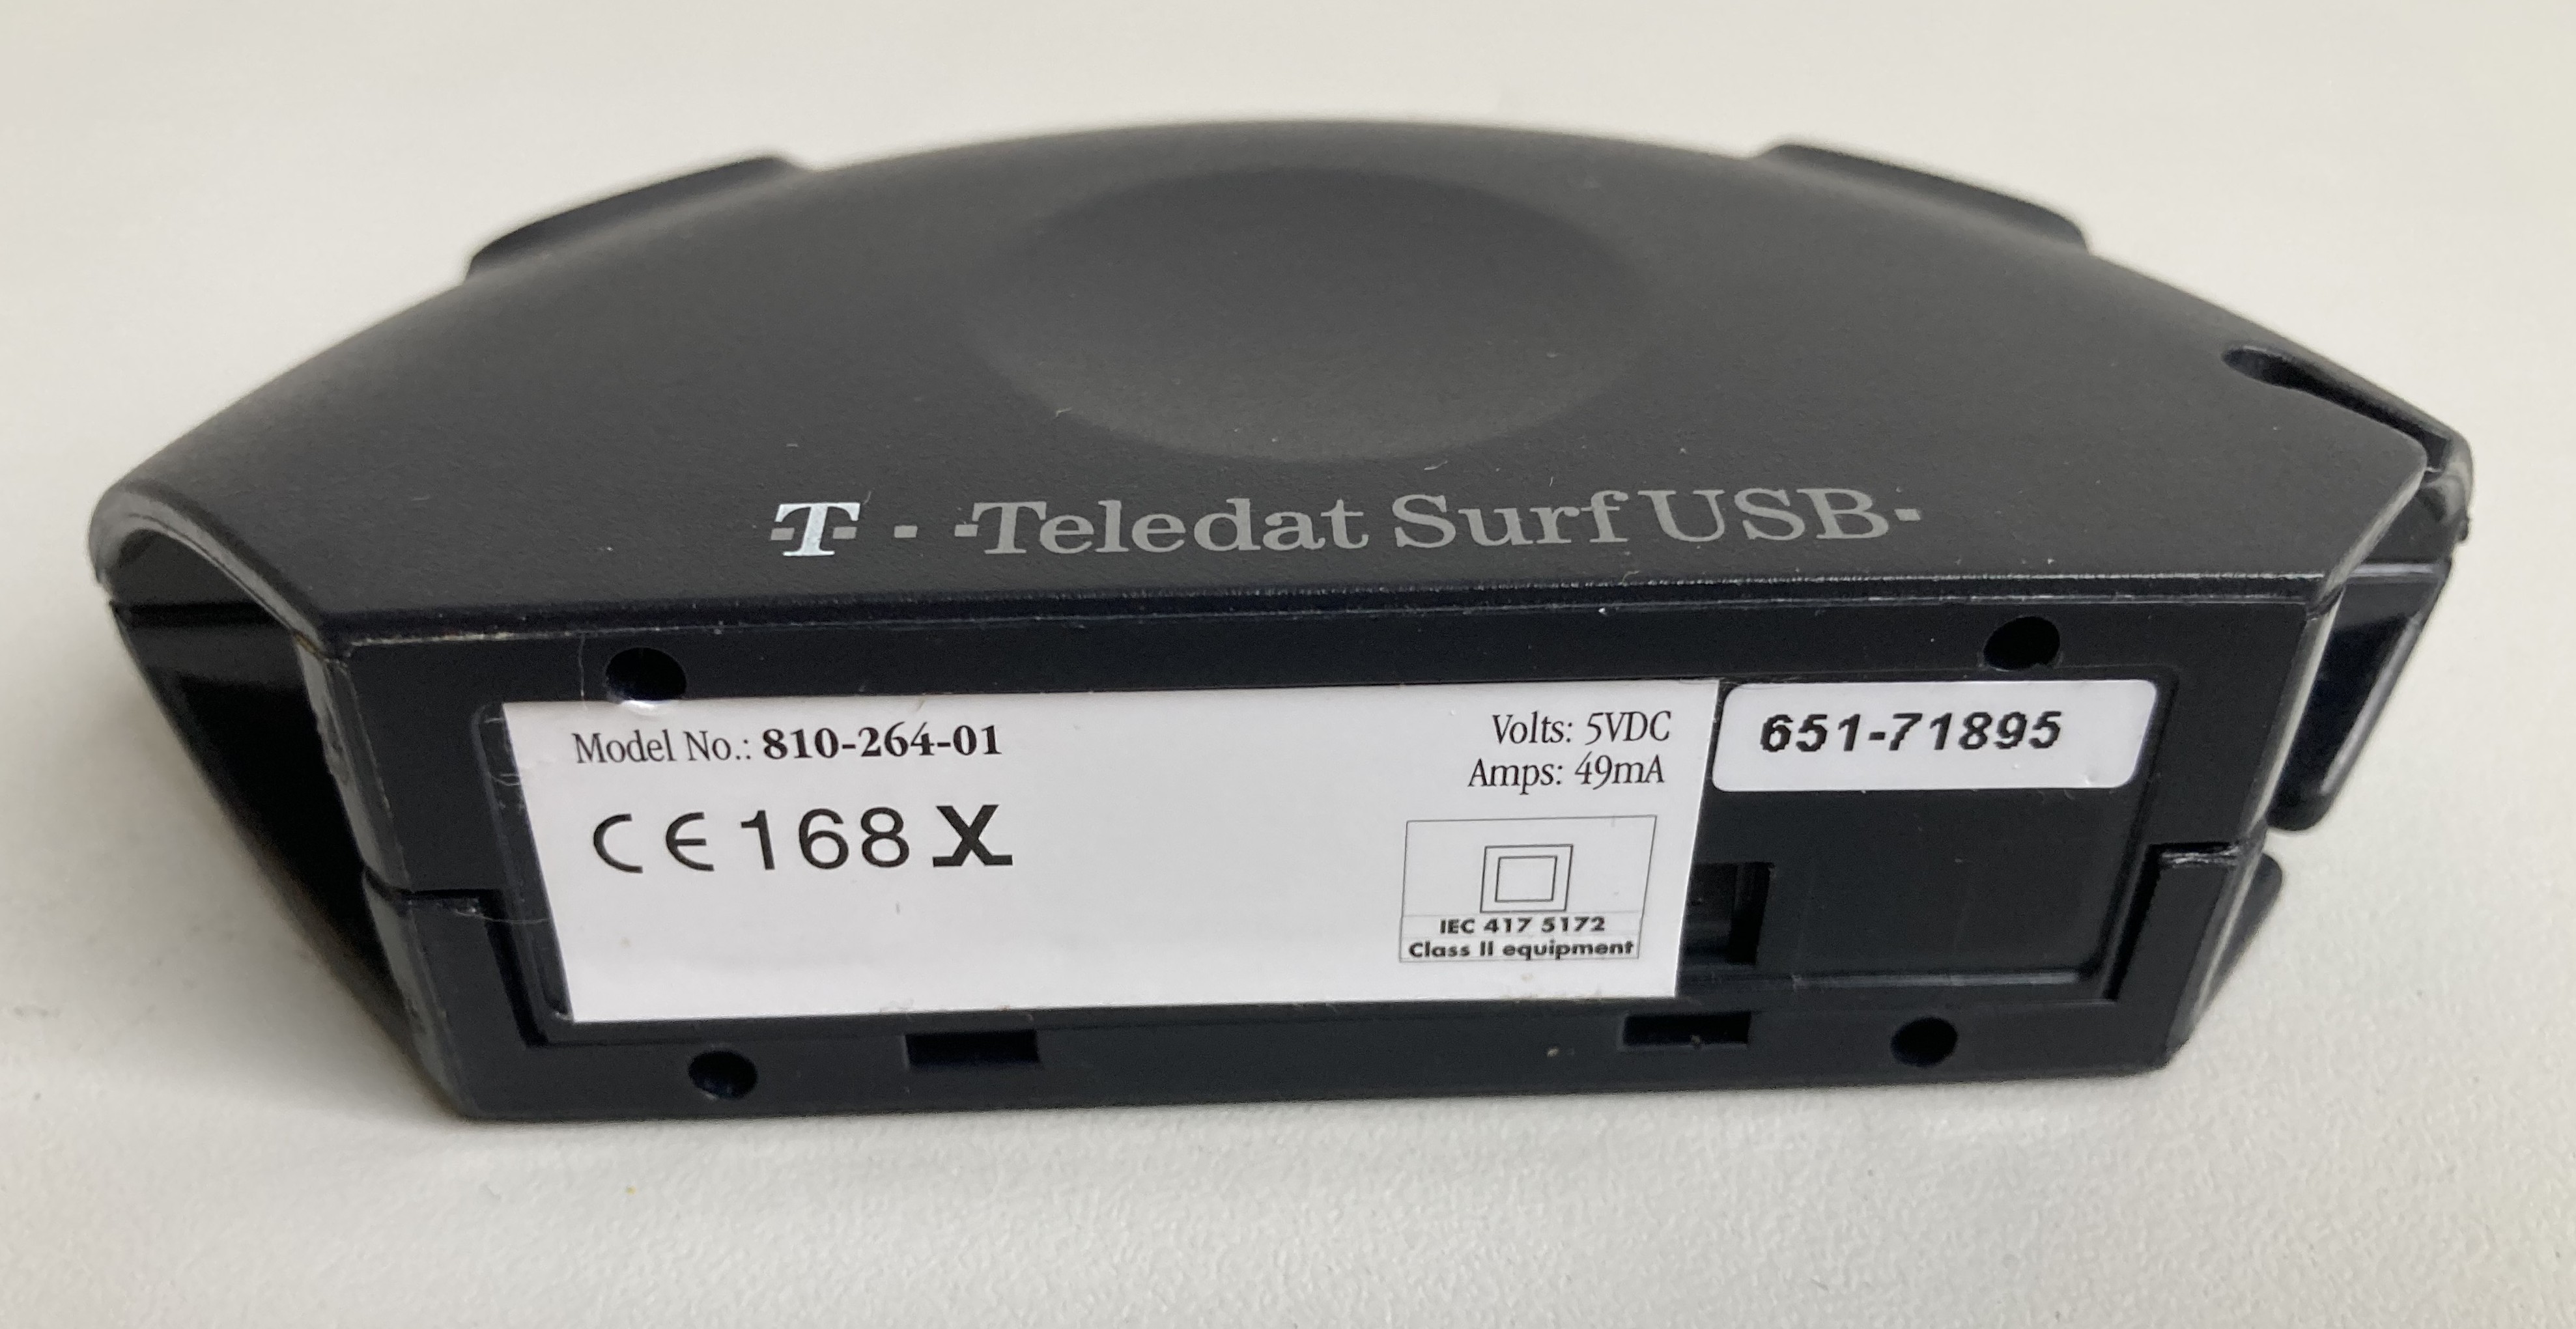 Teledat-Surf_USB-case-perspective1.jpg